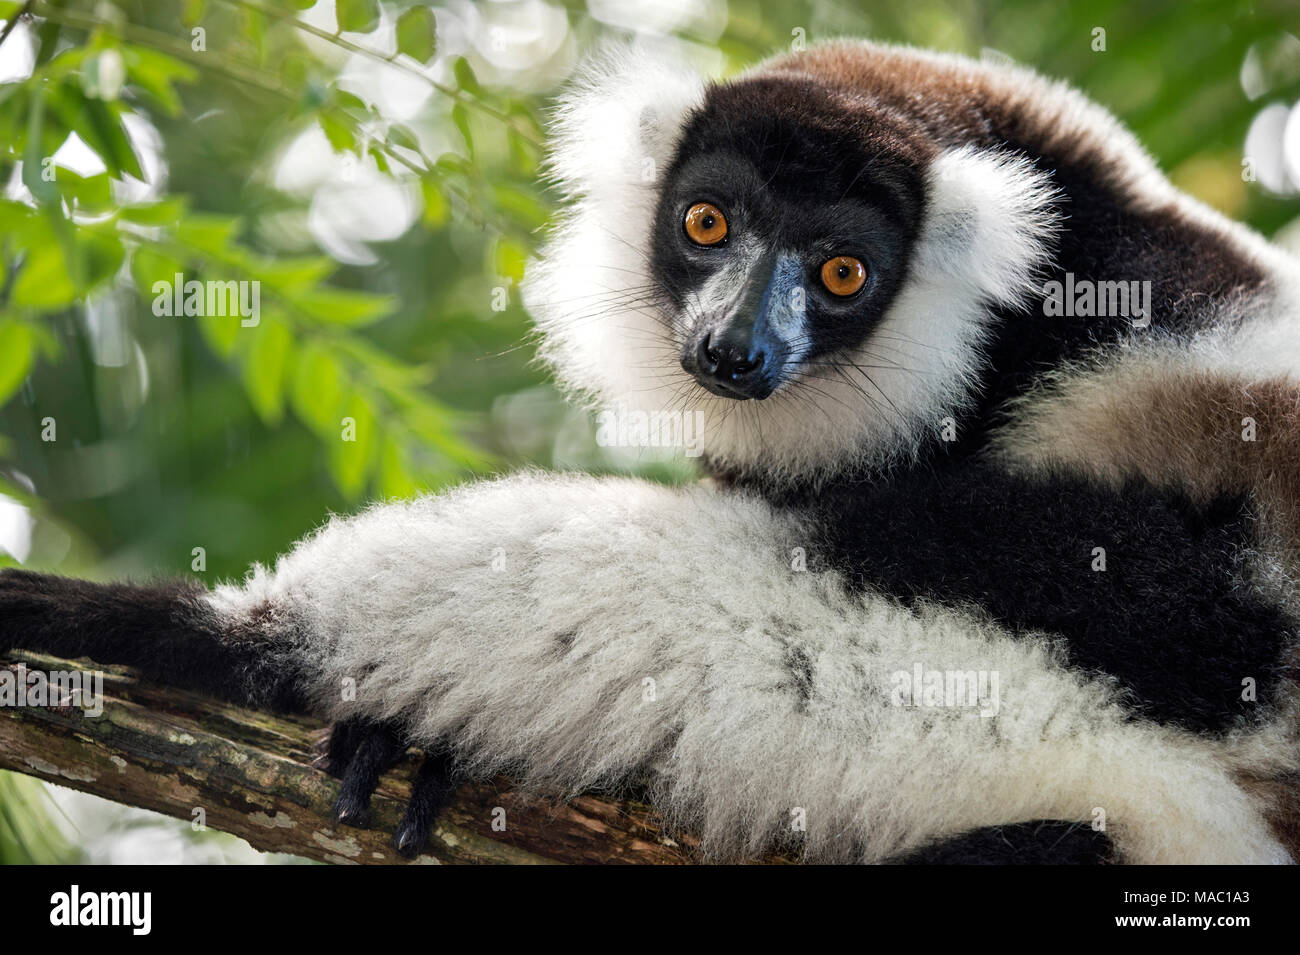 Black-and-white ruffed lemur (Lemur varecia variegata), Lemuridae family, endemic to Madagascar, Ankanin Ny Nofy, Madagascar Stock Photo